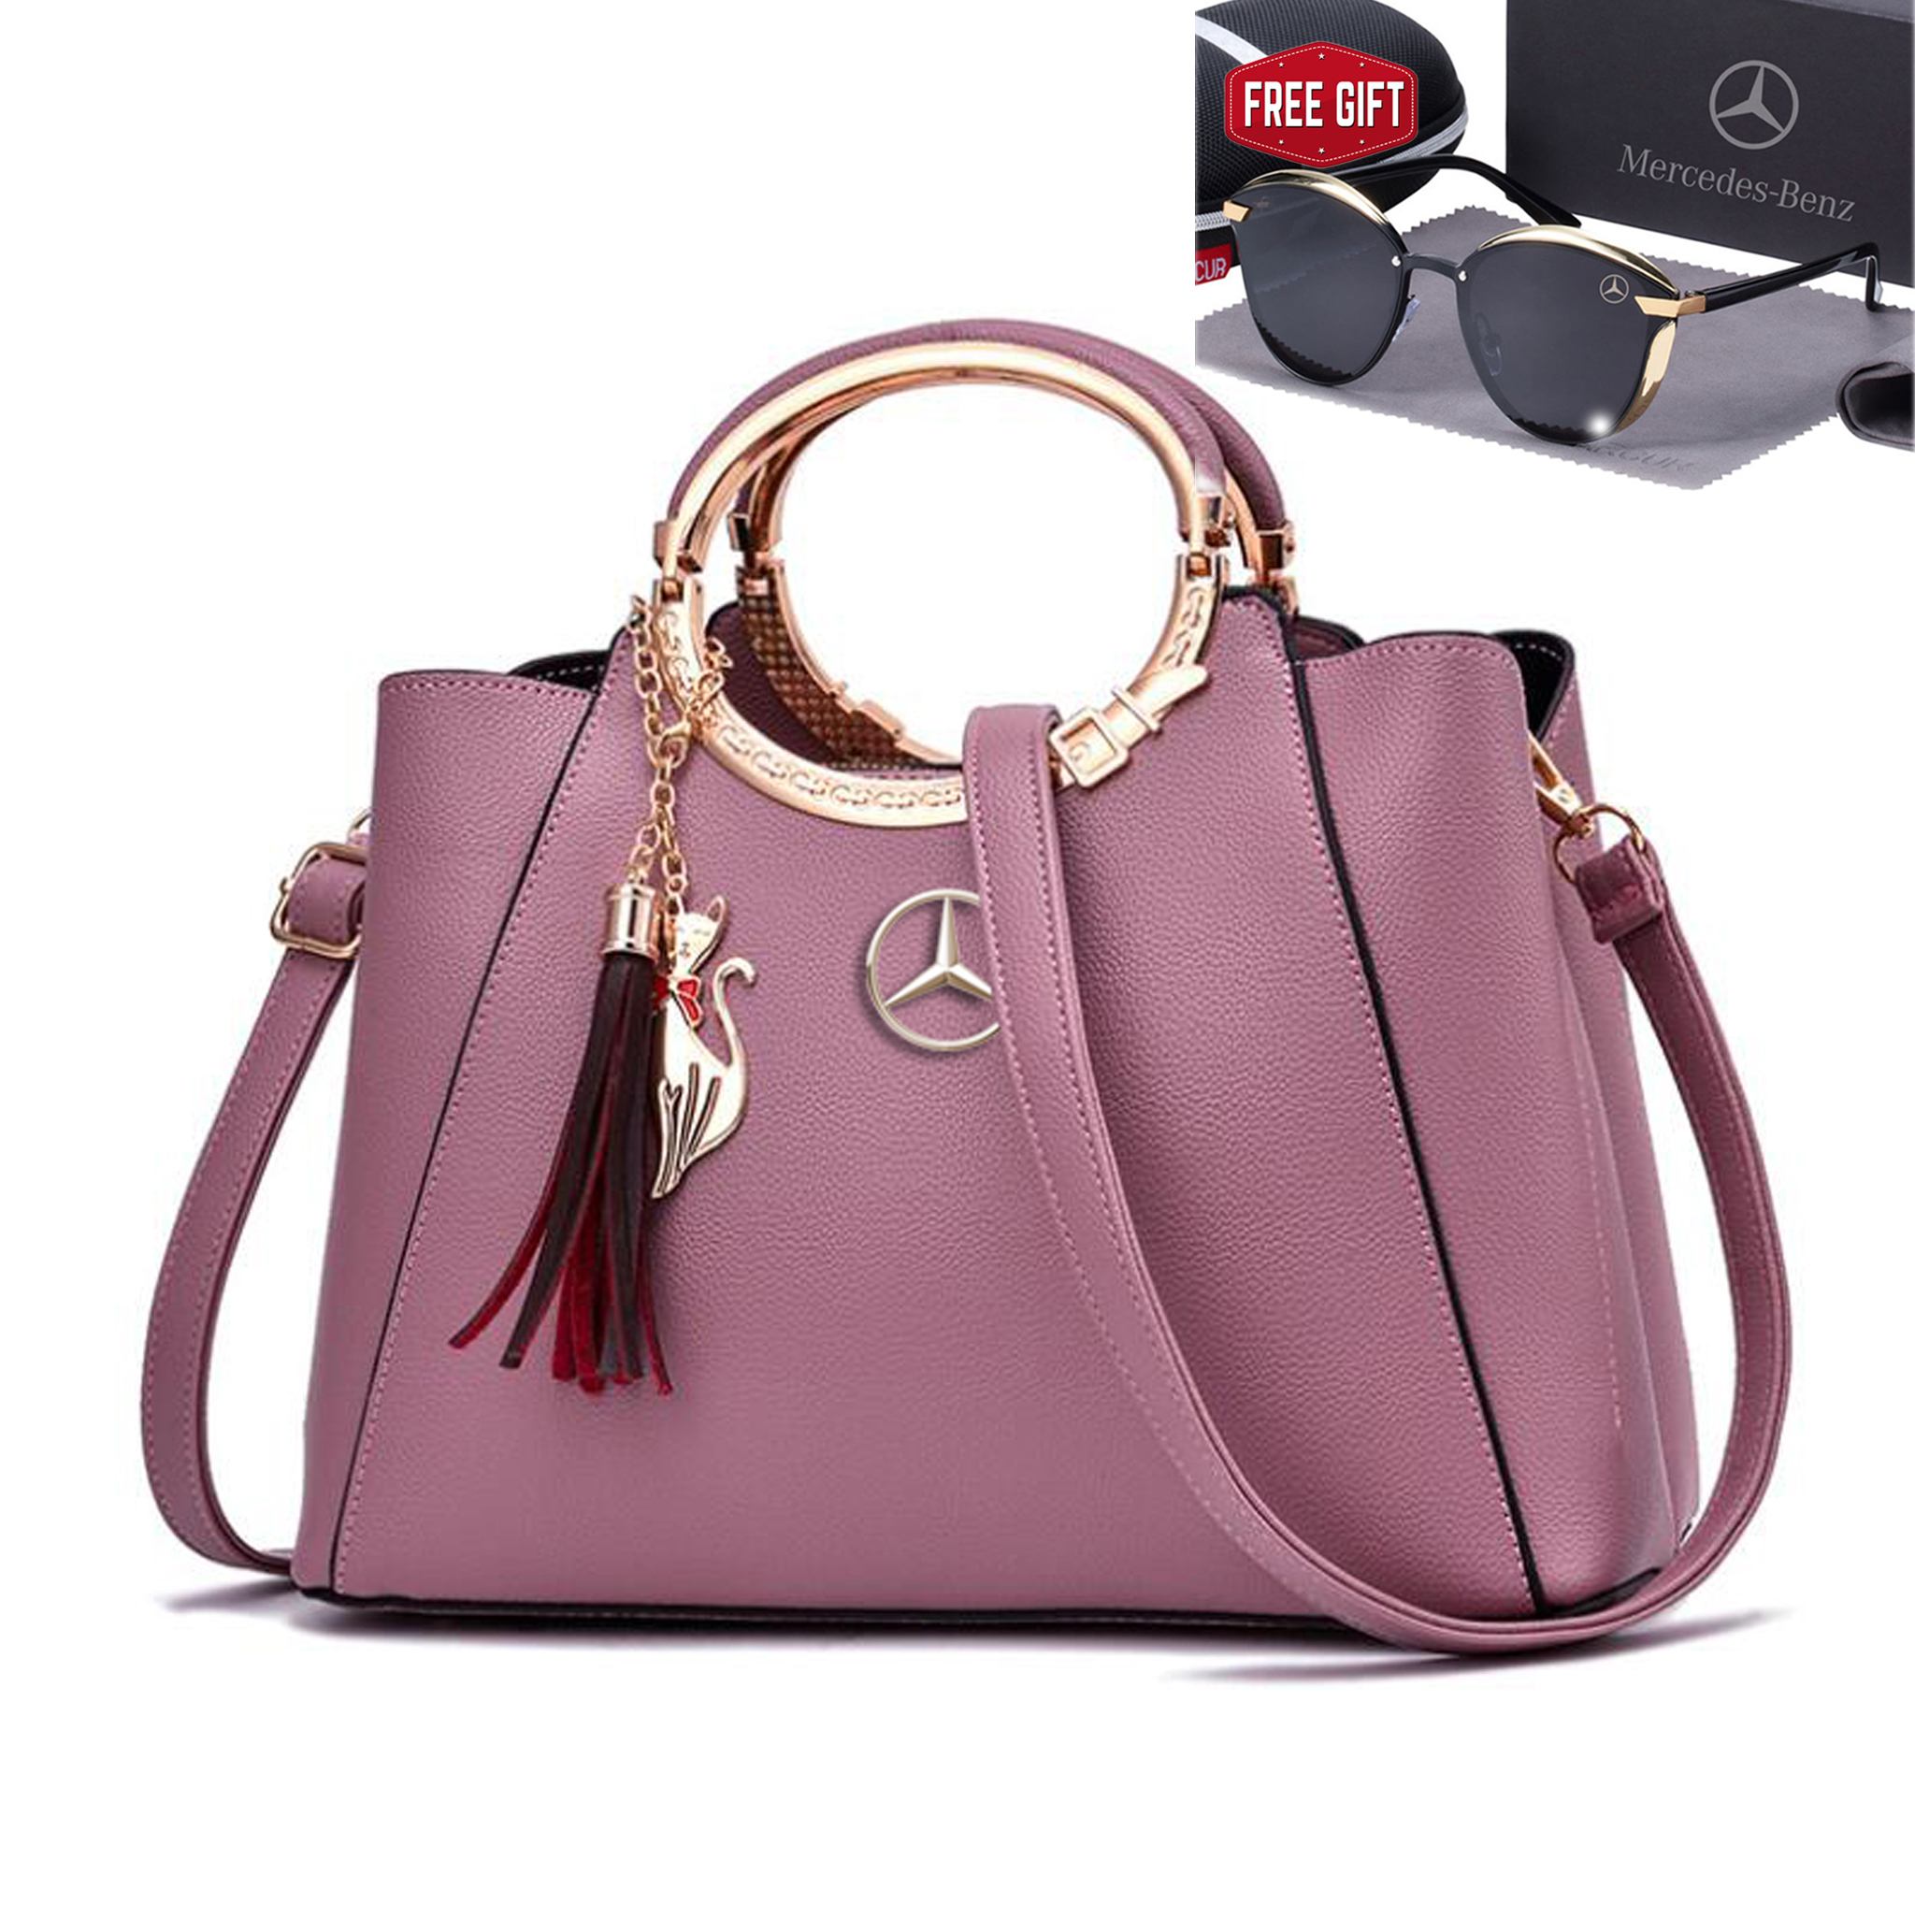 Mercedes-Benz Woman handbag pink 47 x 30 cm - VMD parfumerie